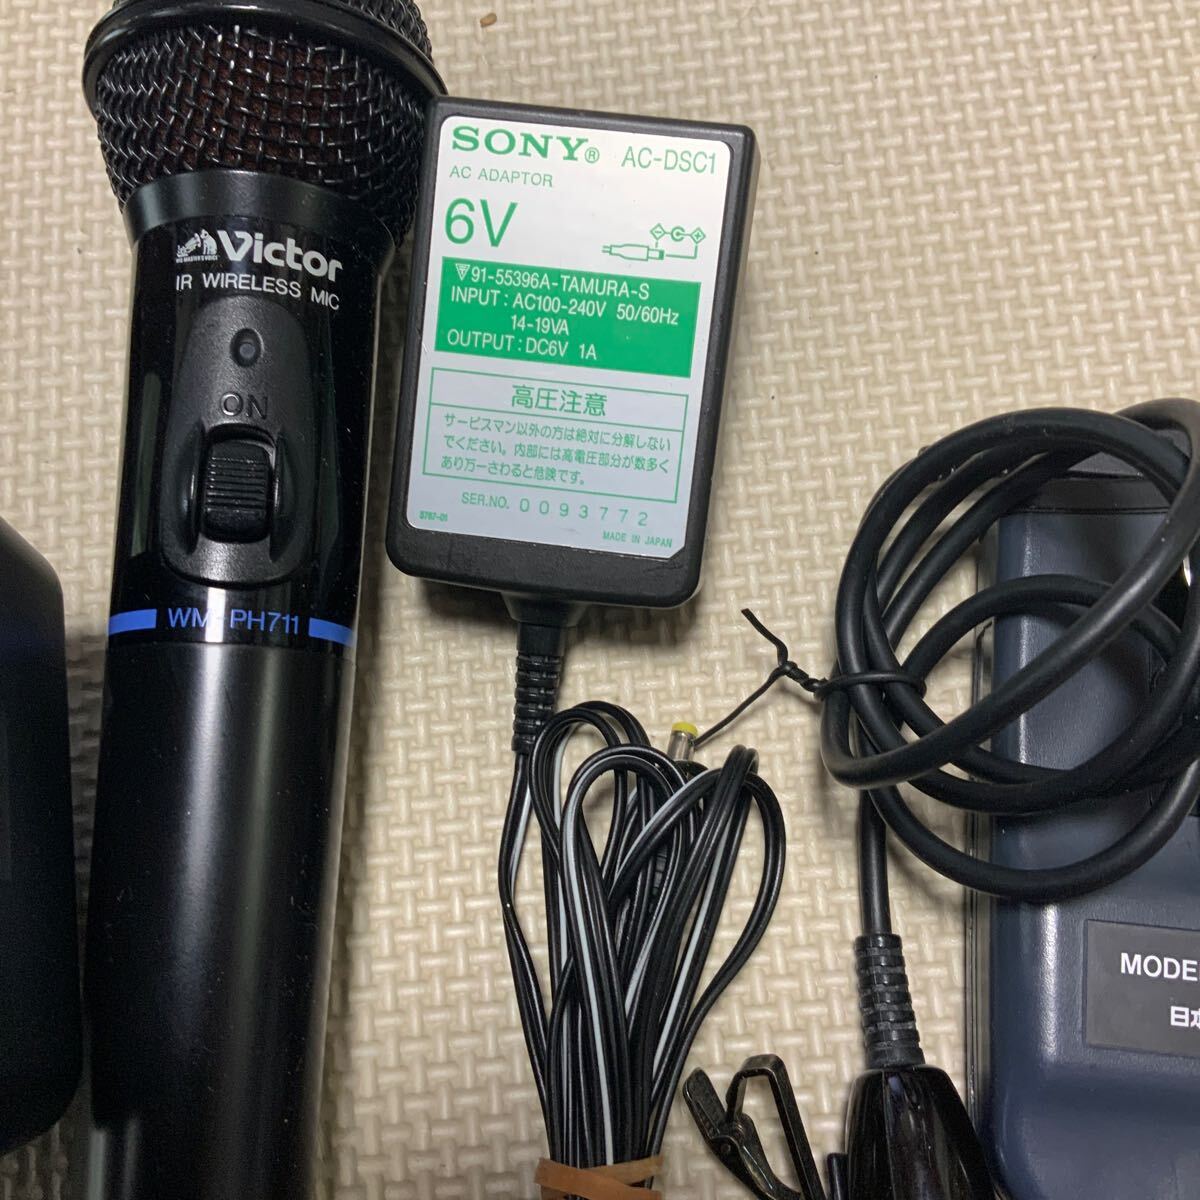  Victor infra-red rays wireless microphone x2 + charge pcs. set WM-PH711&WM-PH81&WT-C80&SSV3815